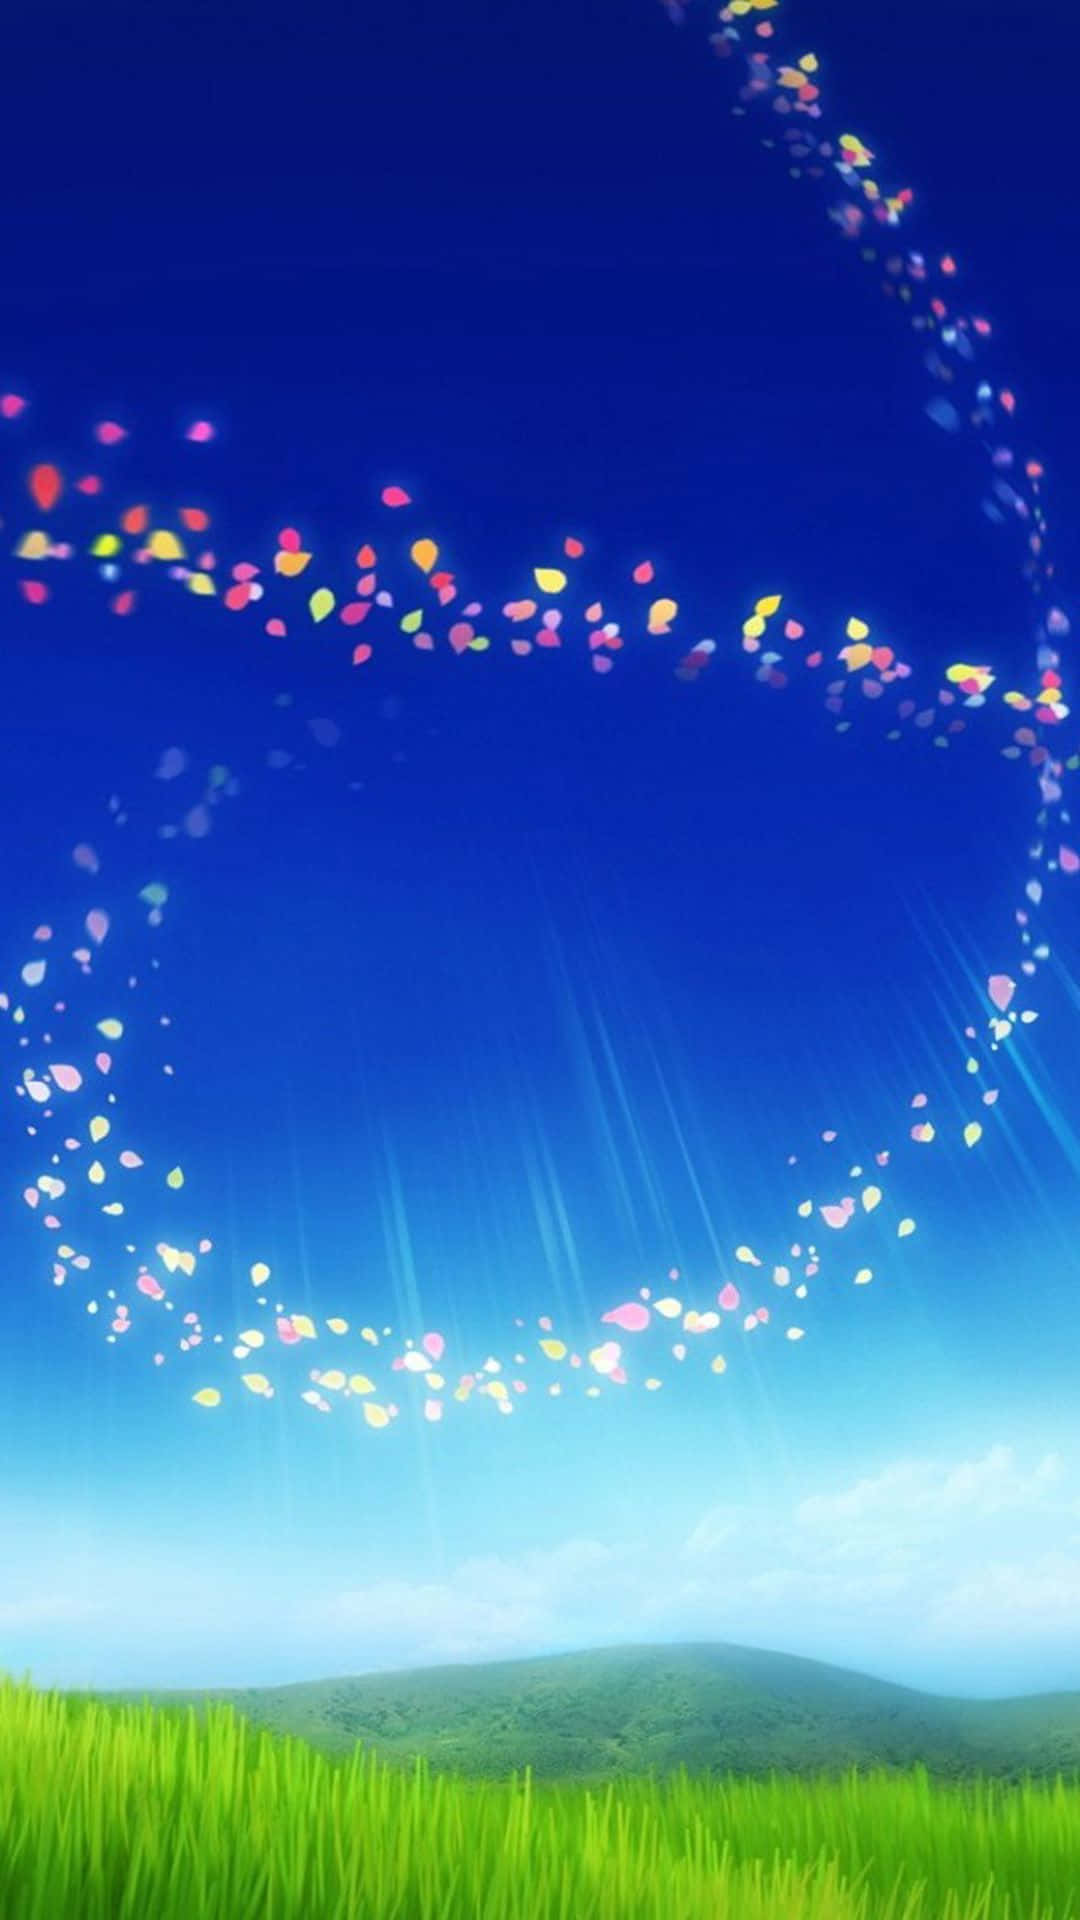 Galaxy S5 Flower Petals Game Background